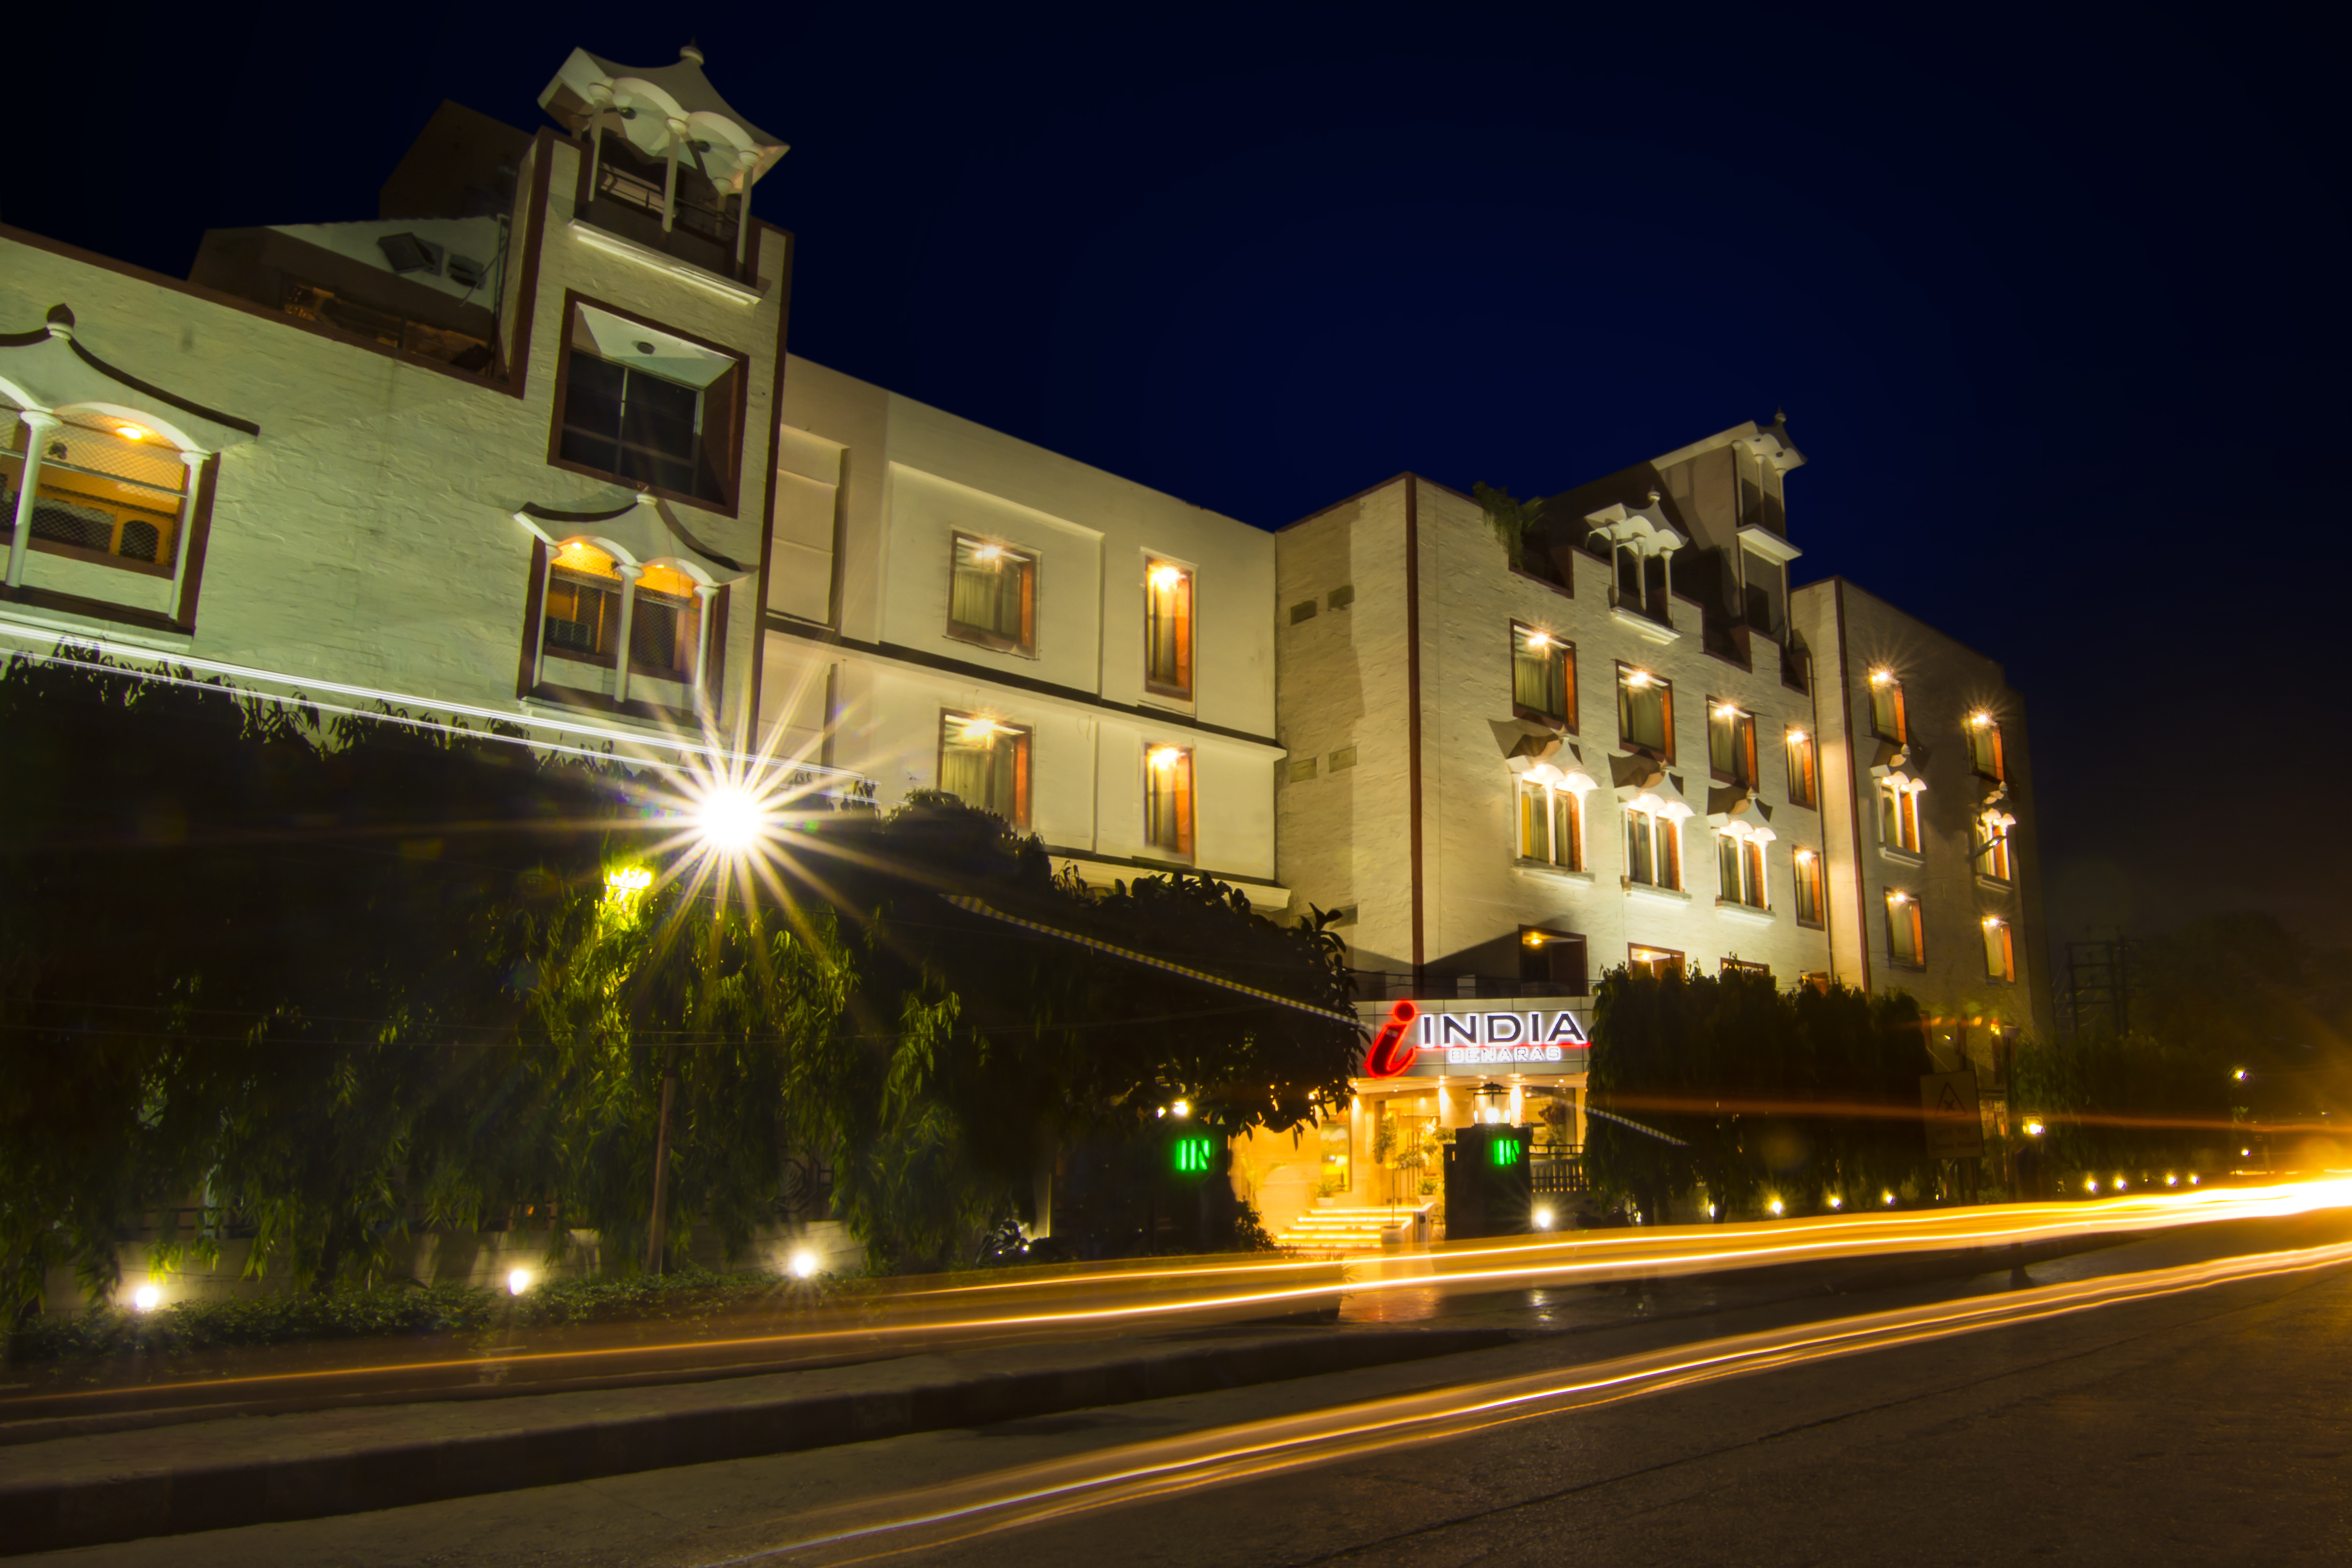 The India Benares Hotel Varanasi